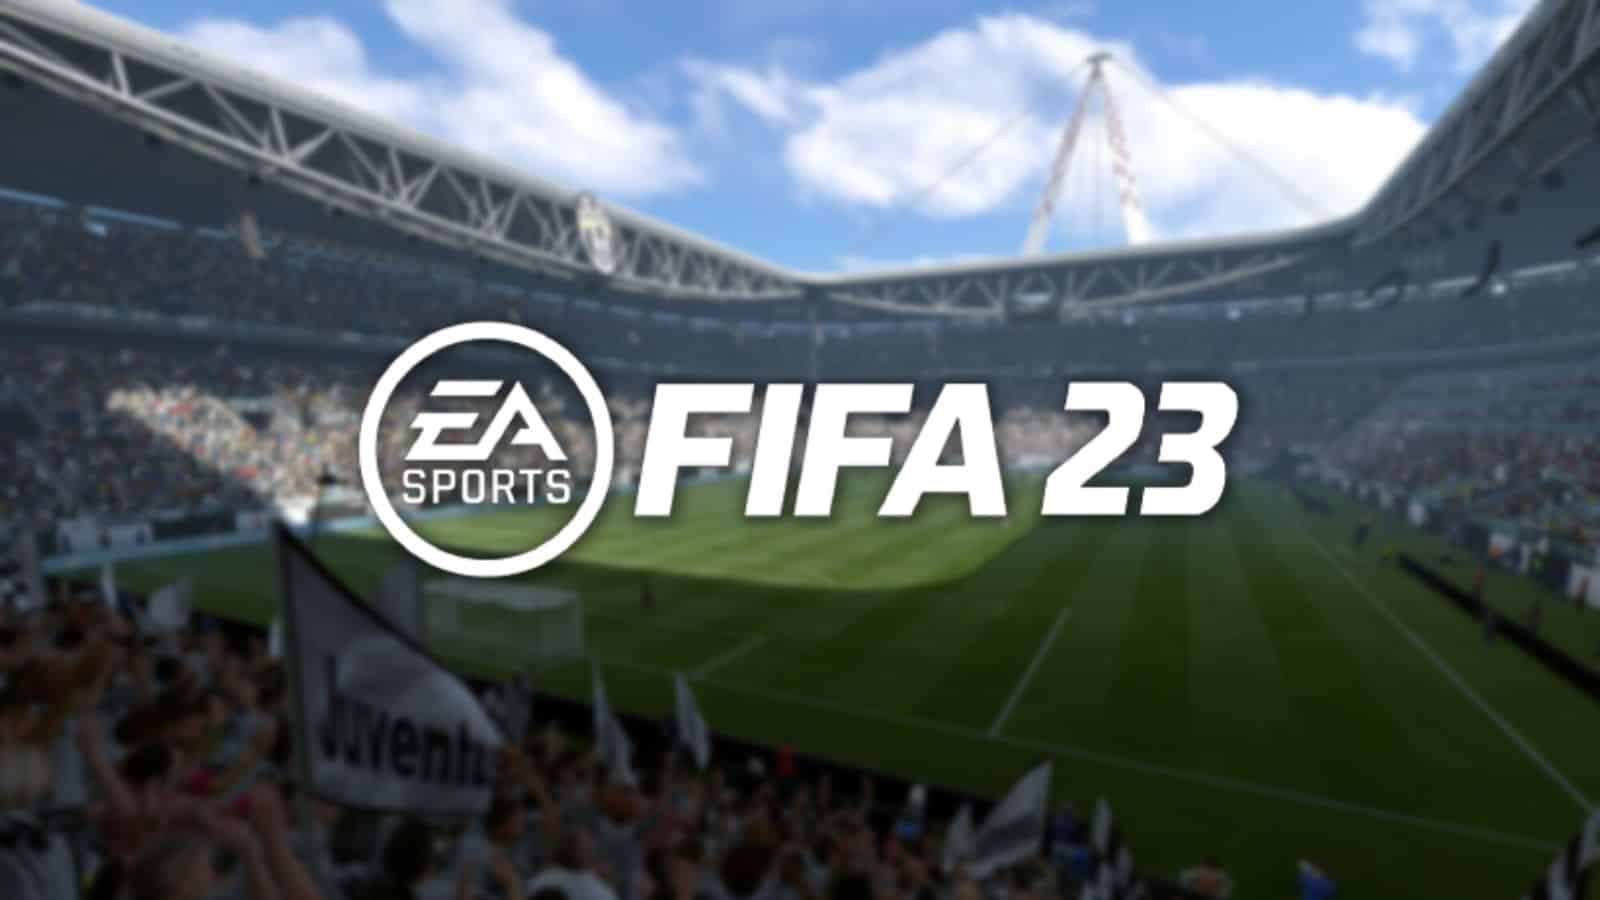 FIFA 23 logo with Juventus stadium